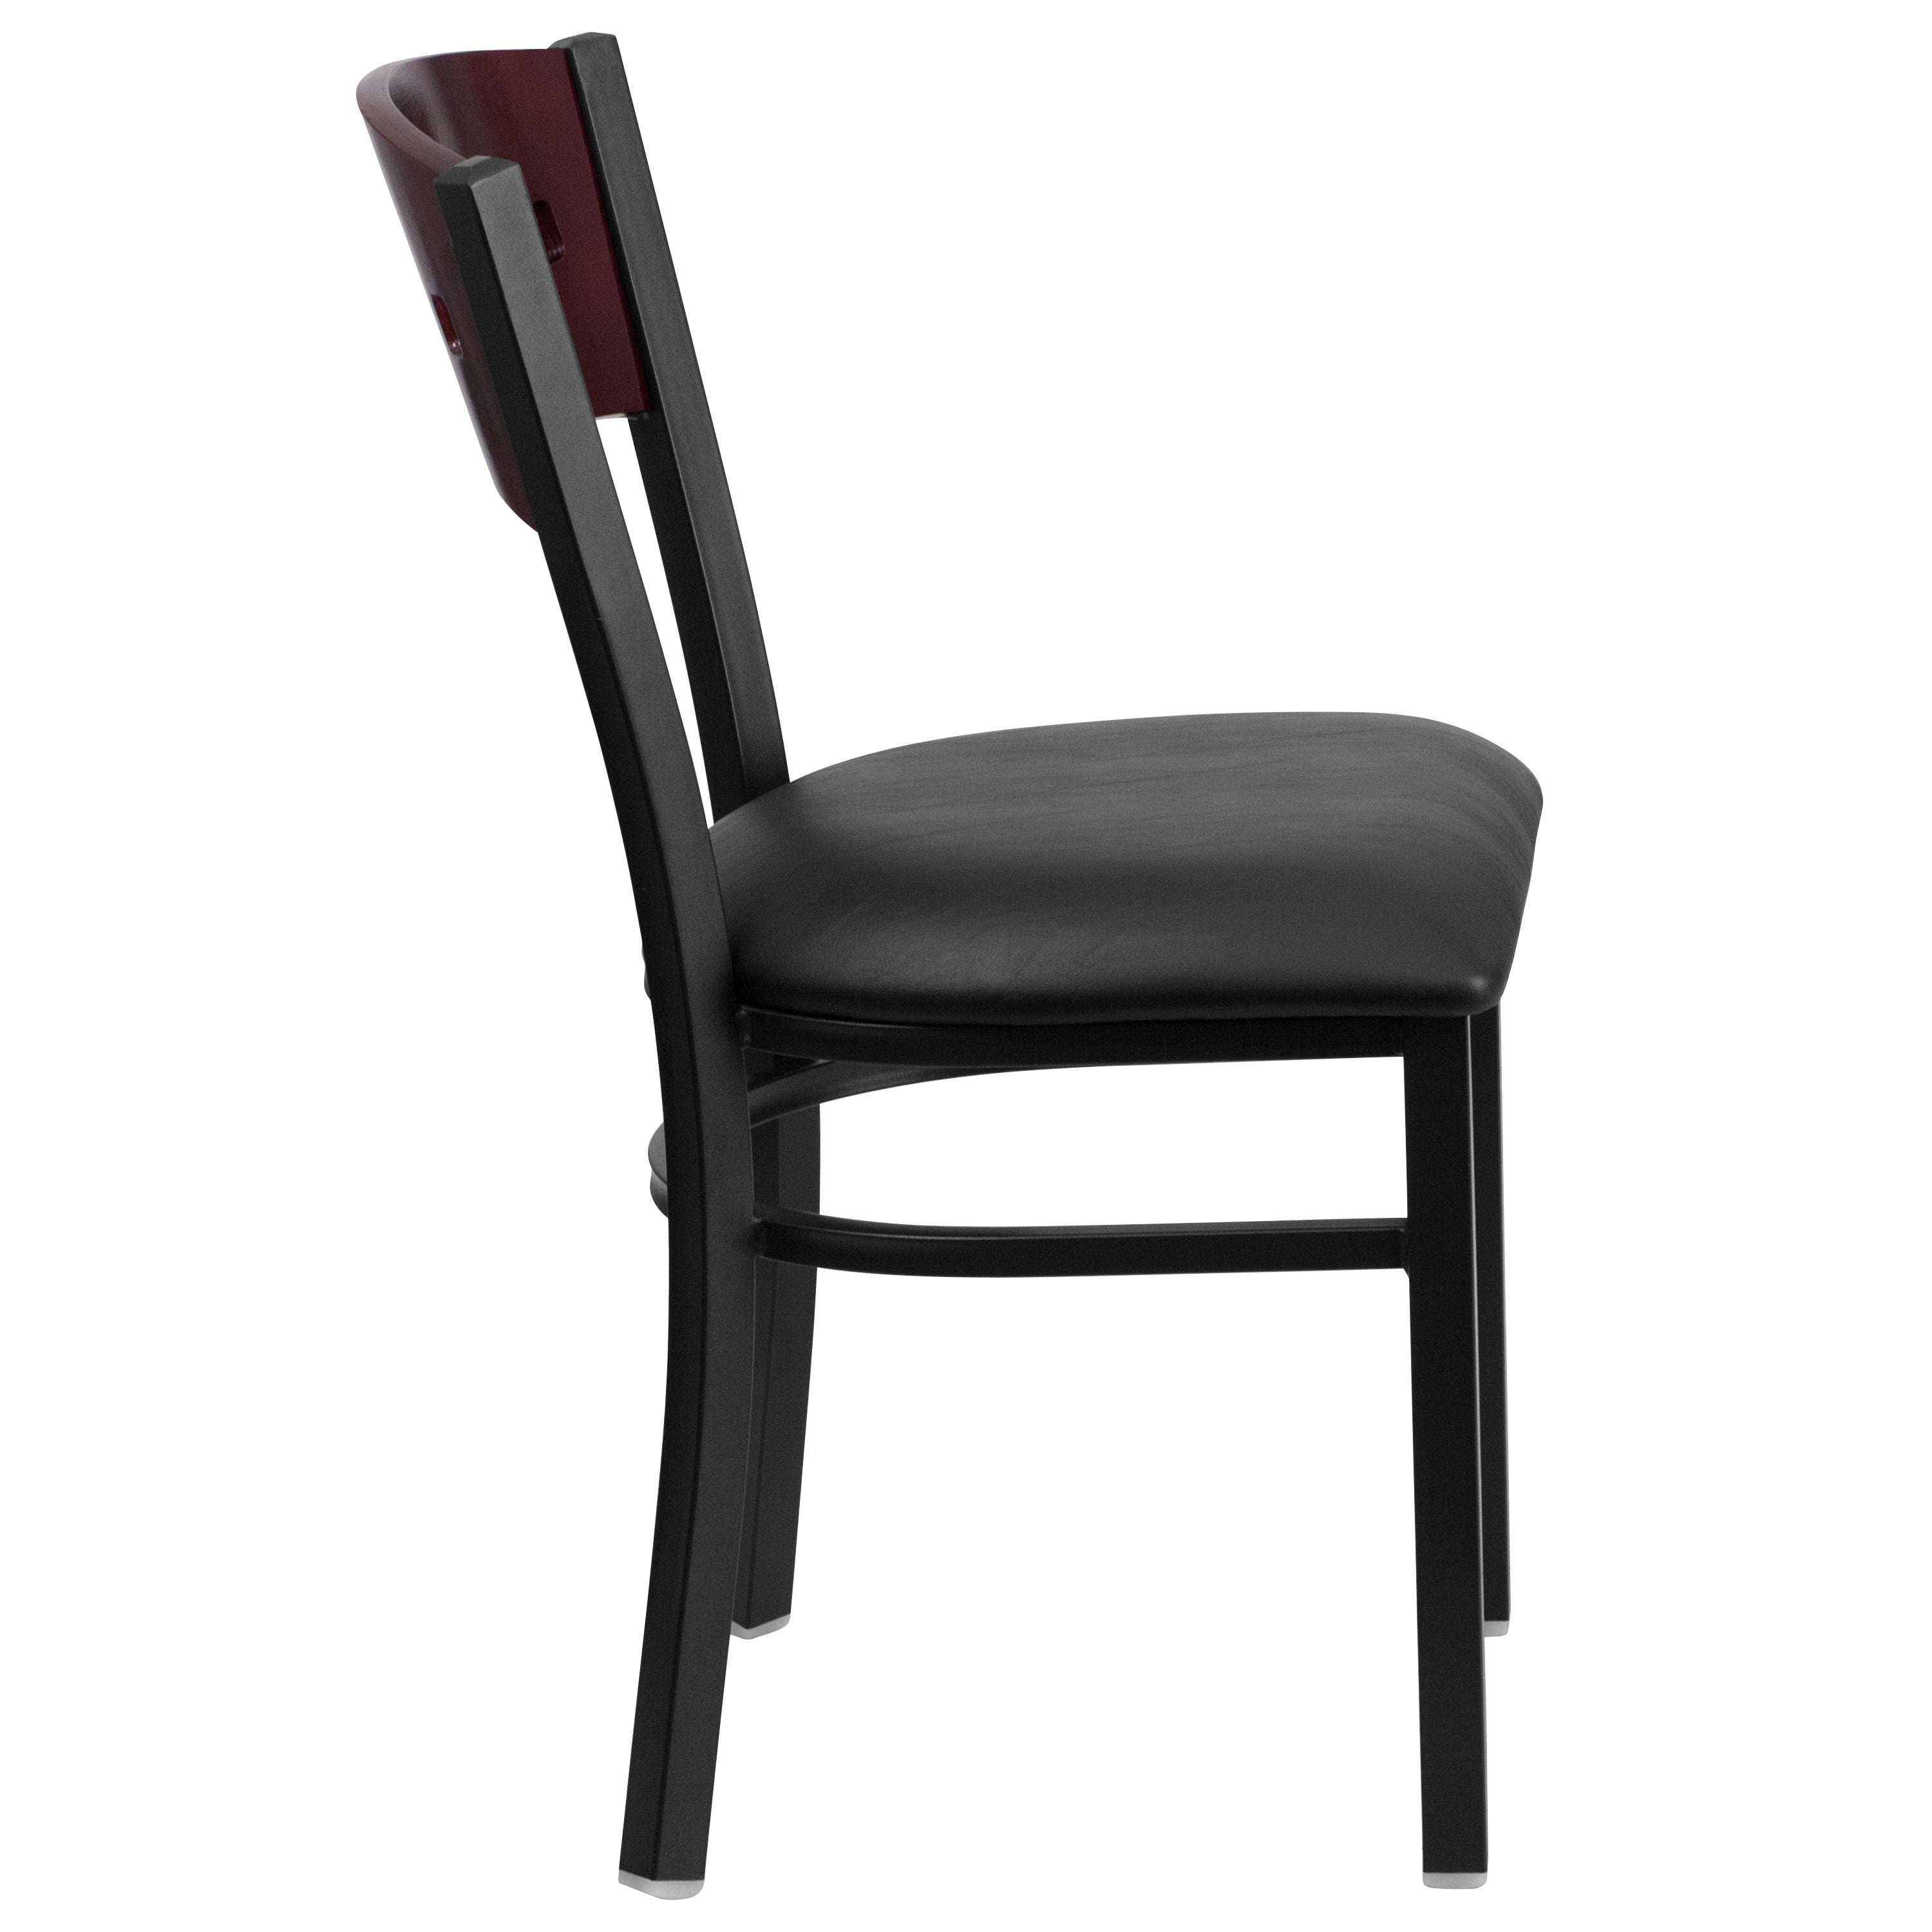 Decorative 4 Square Back Metal Restaurant Chair-Metal Restaurant Chair-Flash Furniture-Wall2Wall Furnishings